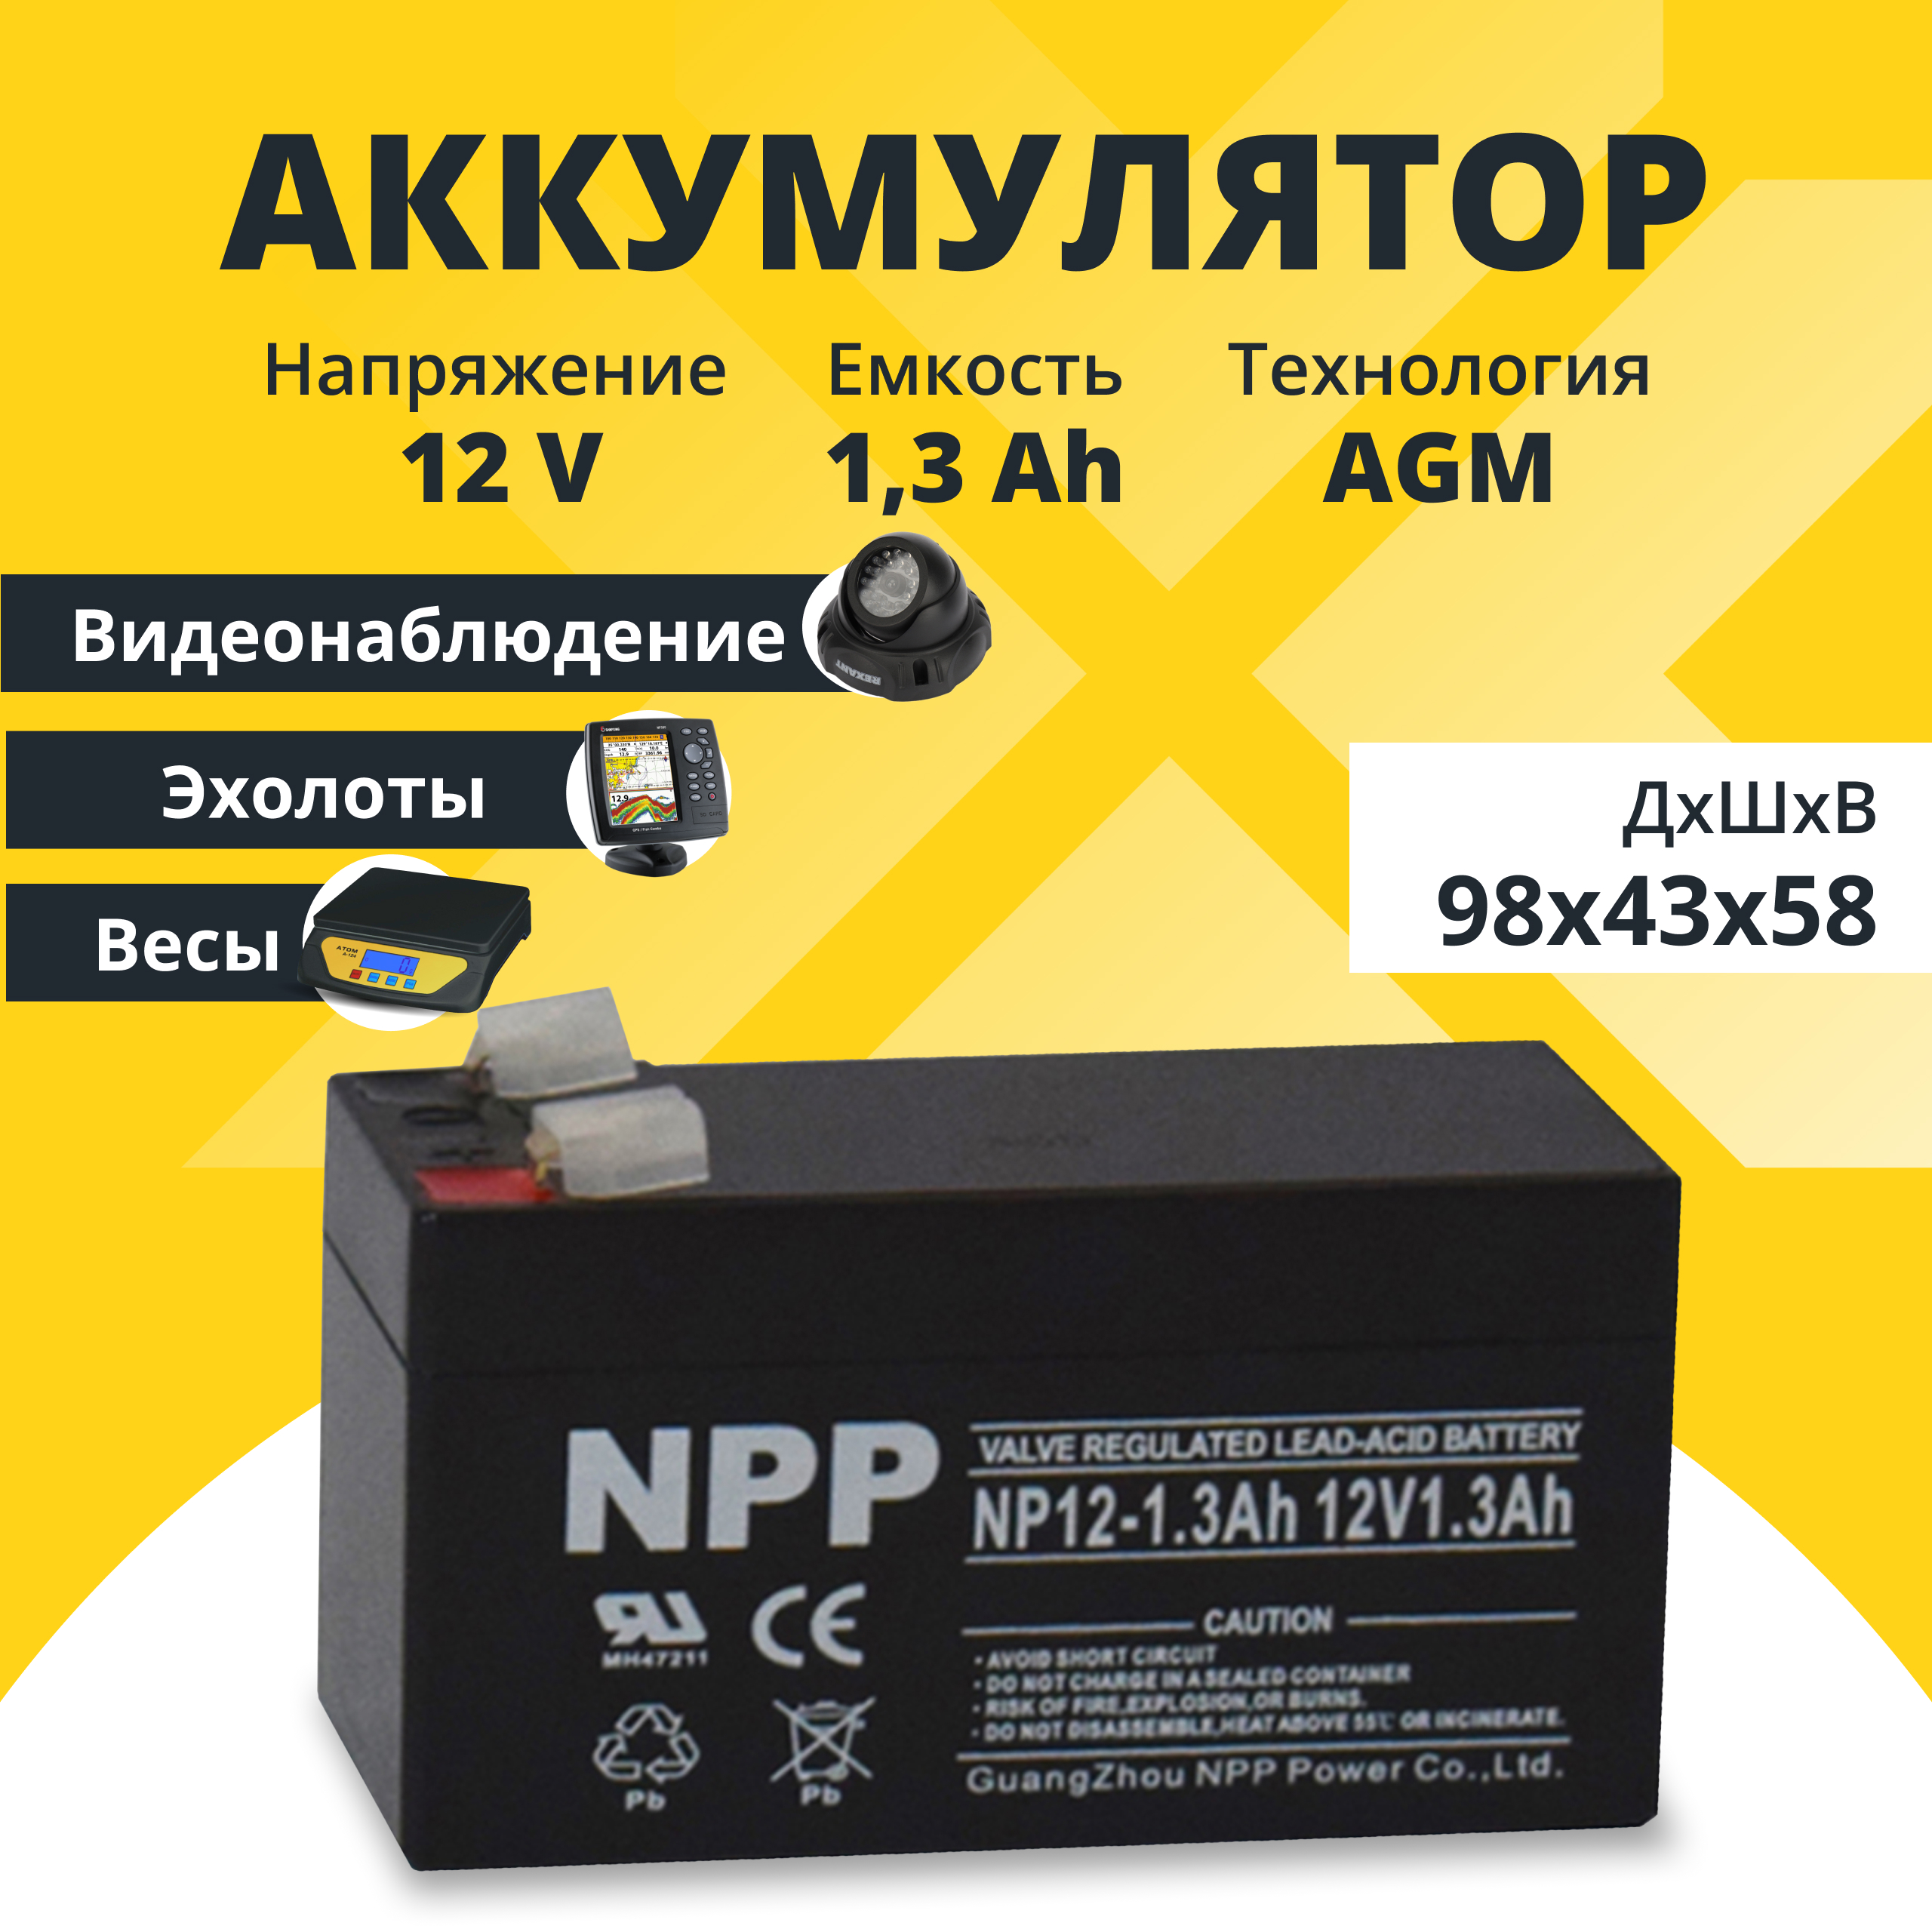 Аккумулятор для ибп NPP 12v 1.3Ah F1/T1 NP12-1.3Ah